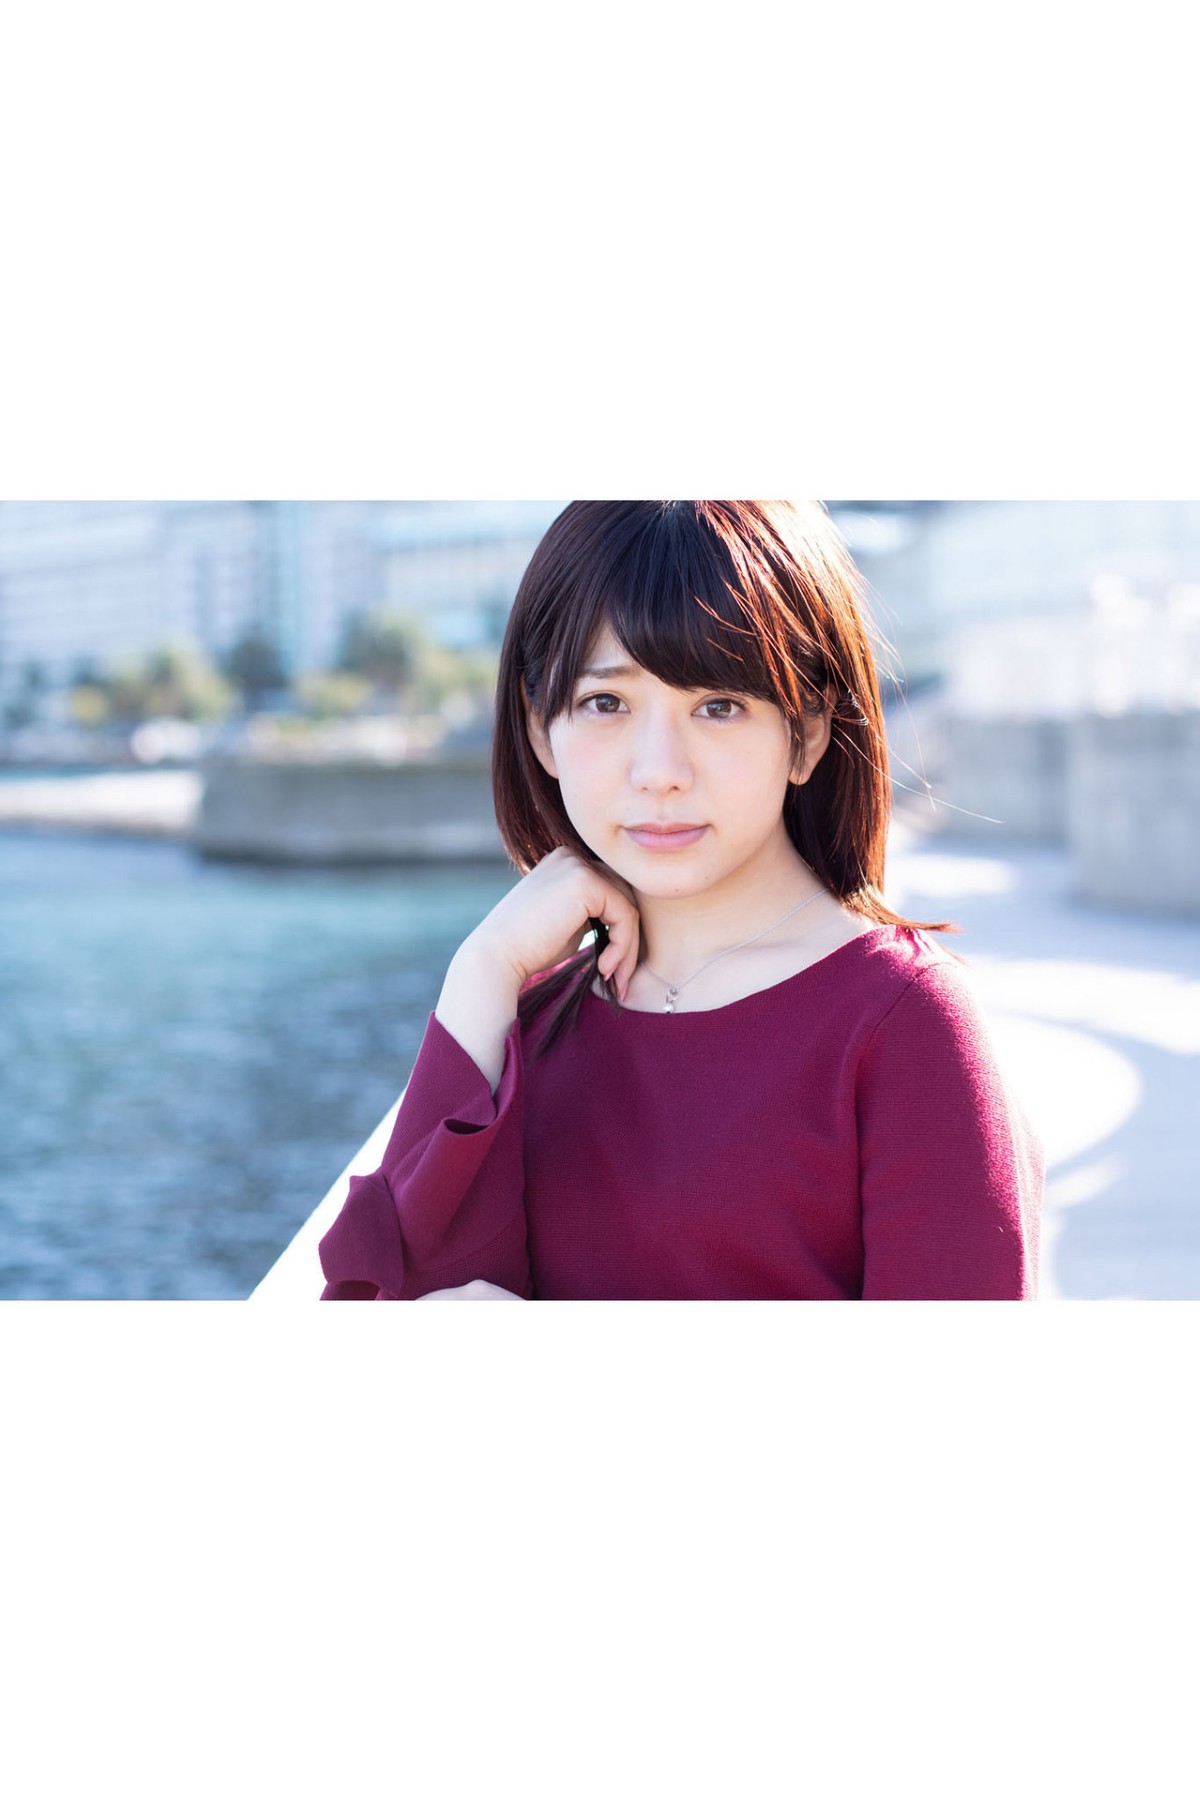 Photobook 2019 07 19 Asuna Kawai Maria Aine Nozomi Arimura 2 Days 1 Night Hot Spring Date 0049 0445017725.jpg